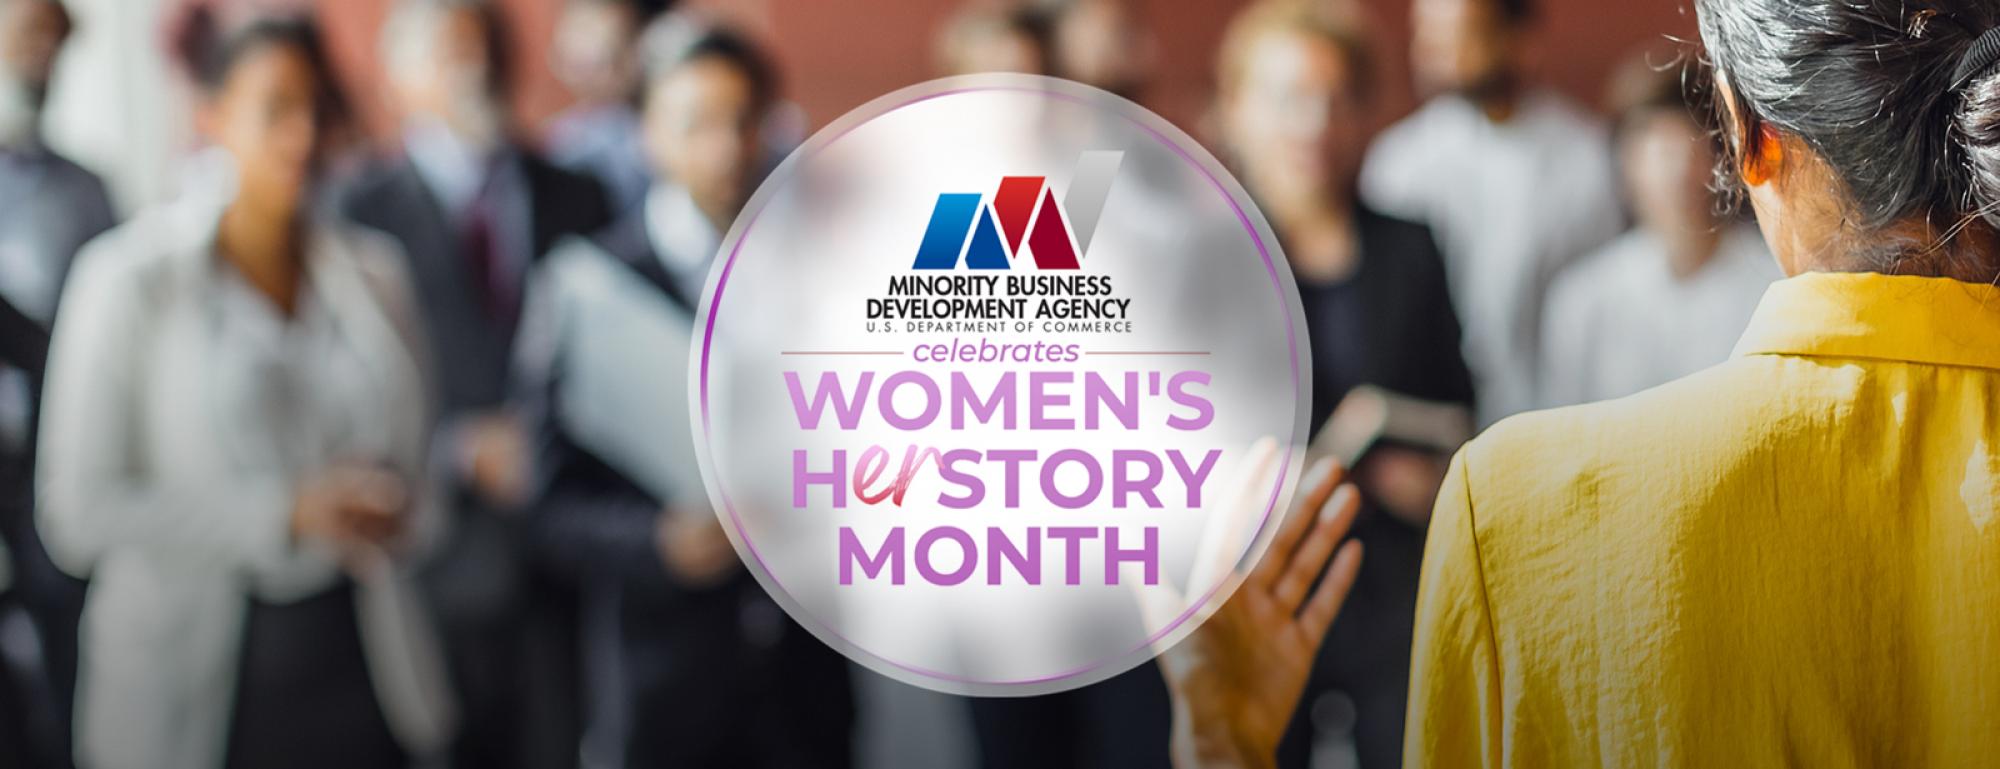 MBDA Celebrates Women's History Month